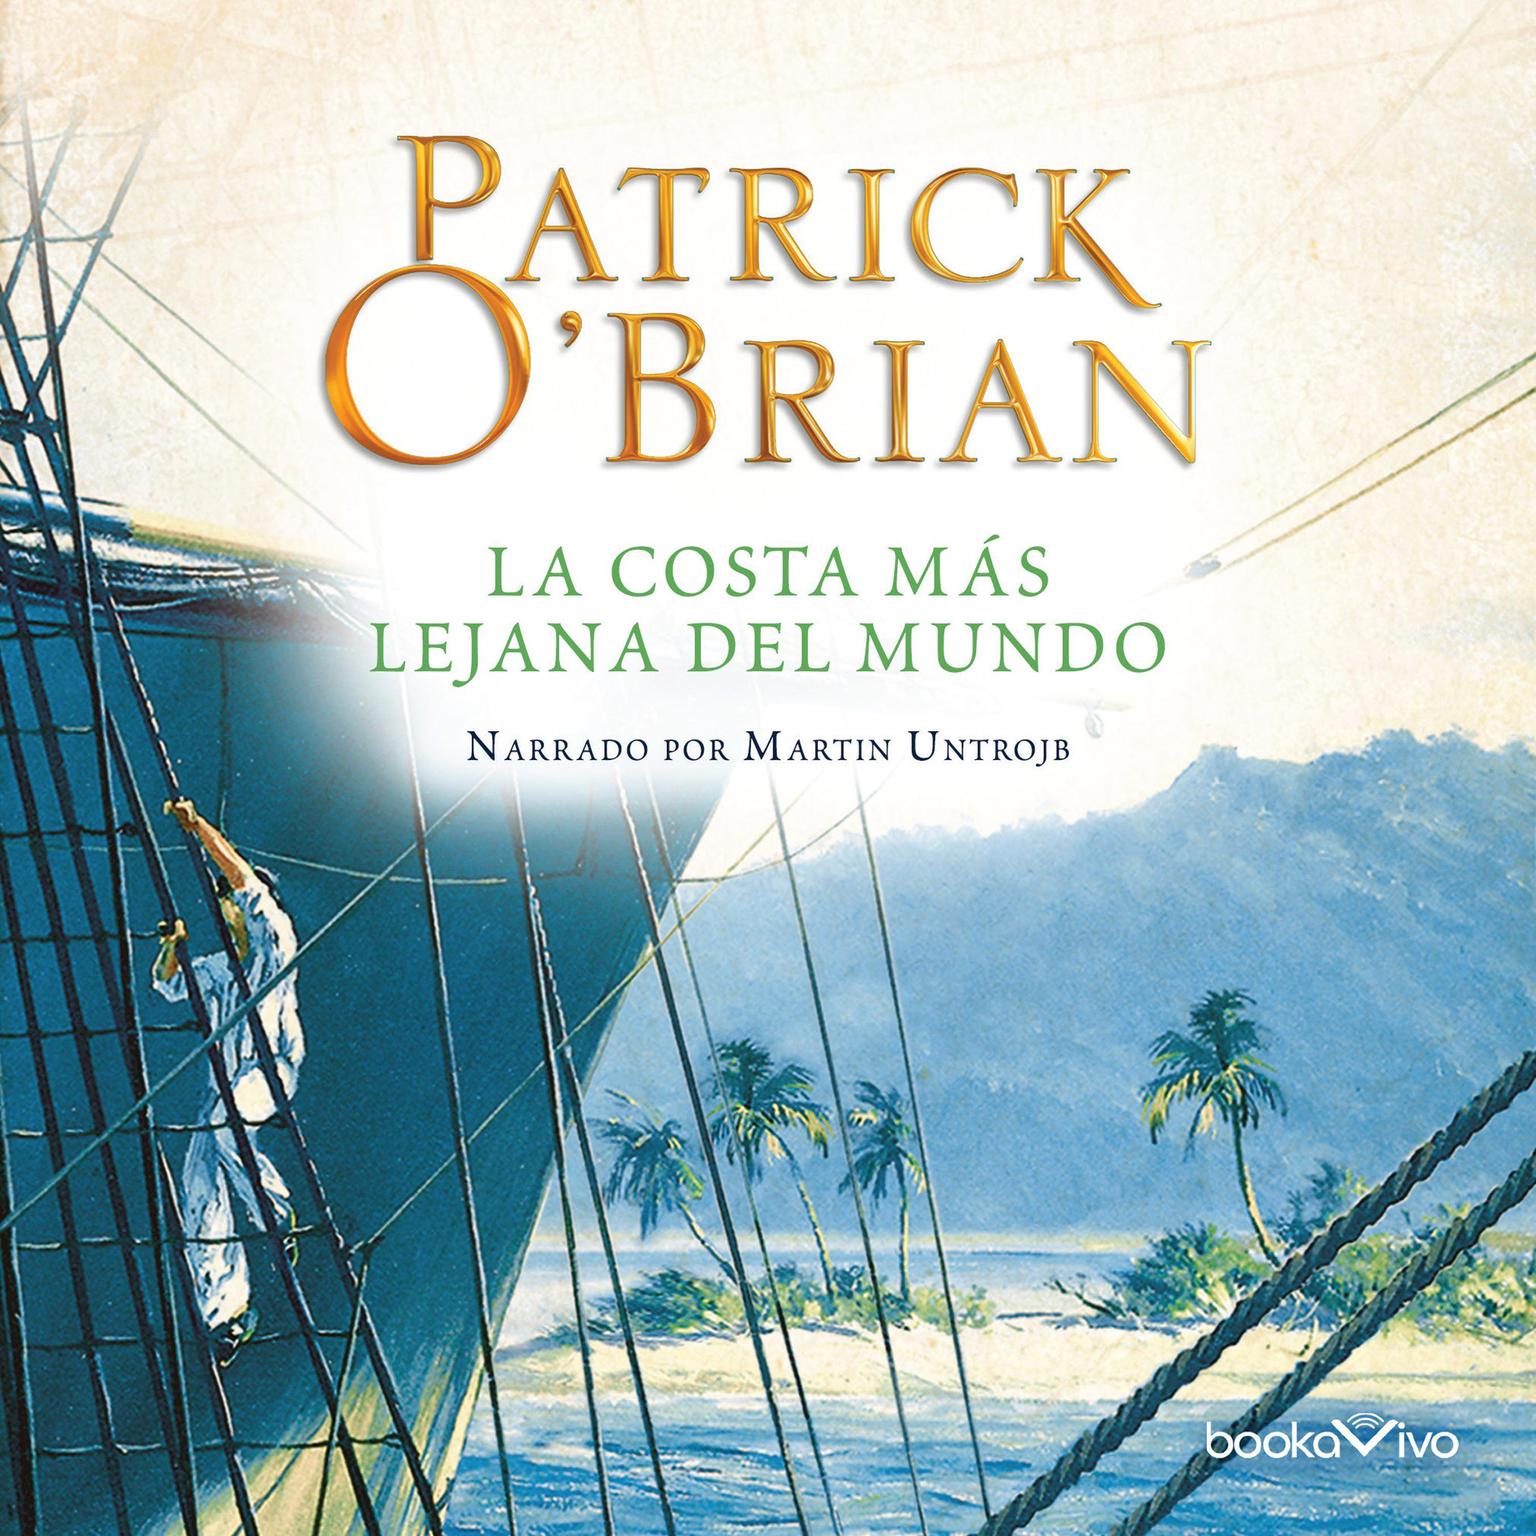 La costa más lejana del mundo (The Far Side of the World) Audiobook, by Patrick O'Brian